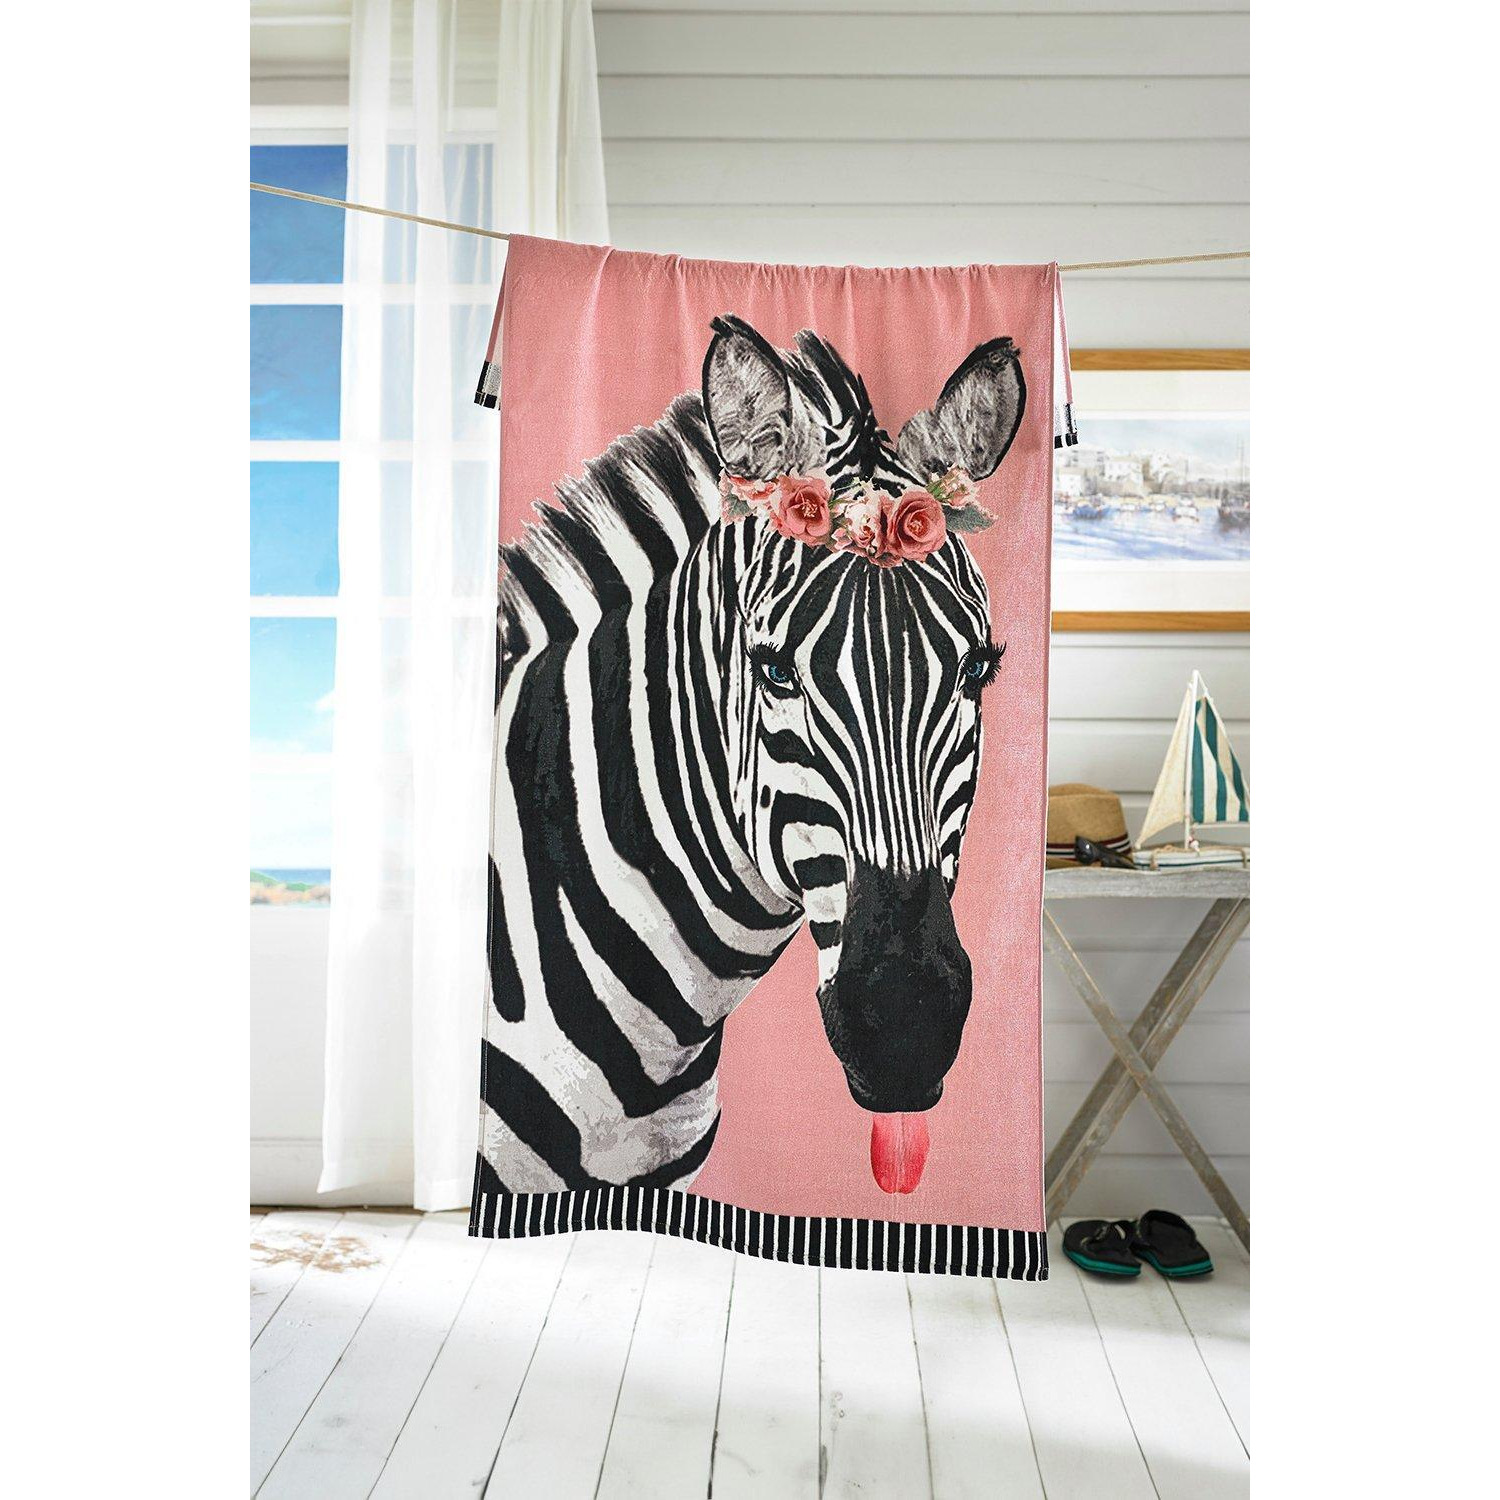 Zebra Printed Velour 75x150cm Cotton Beach Towel - image 1